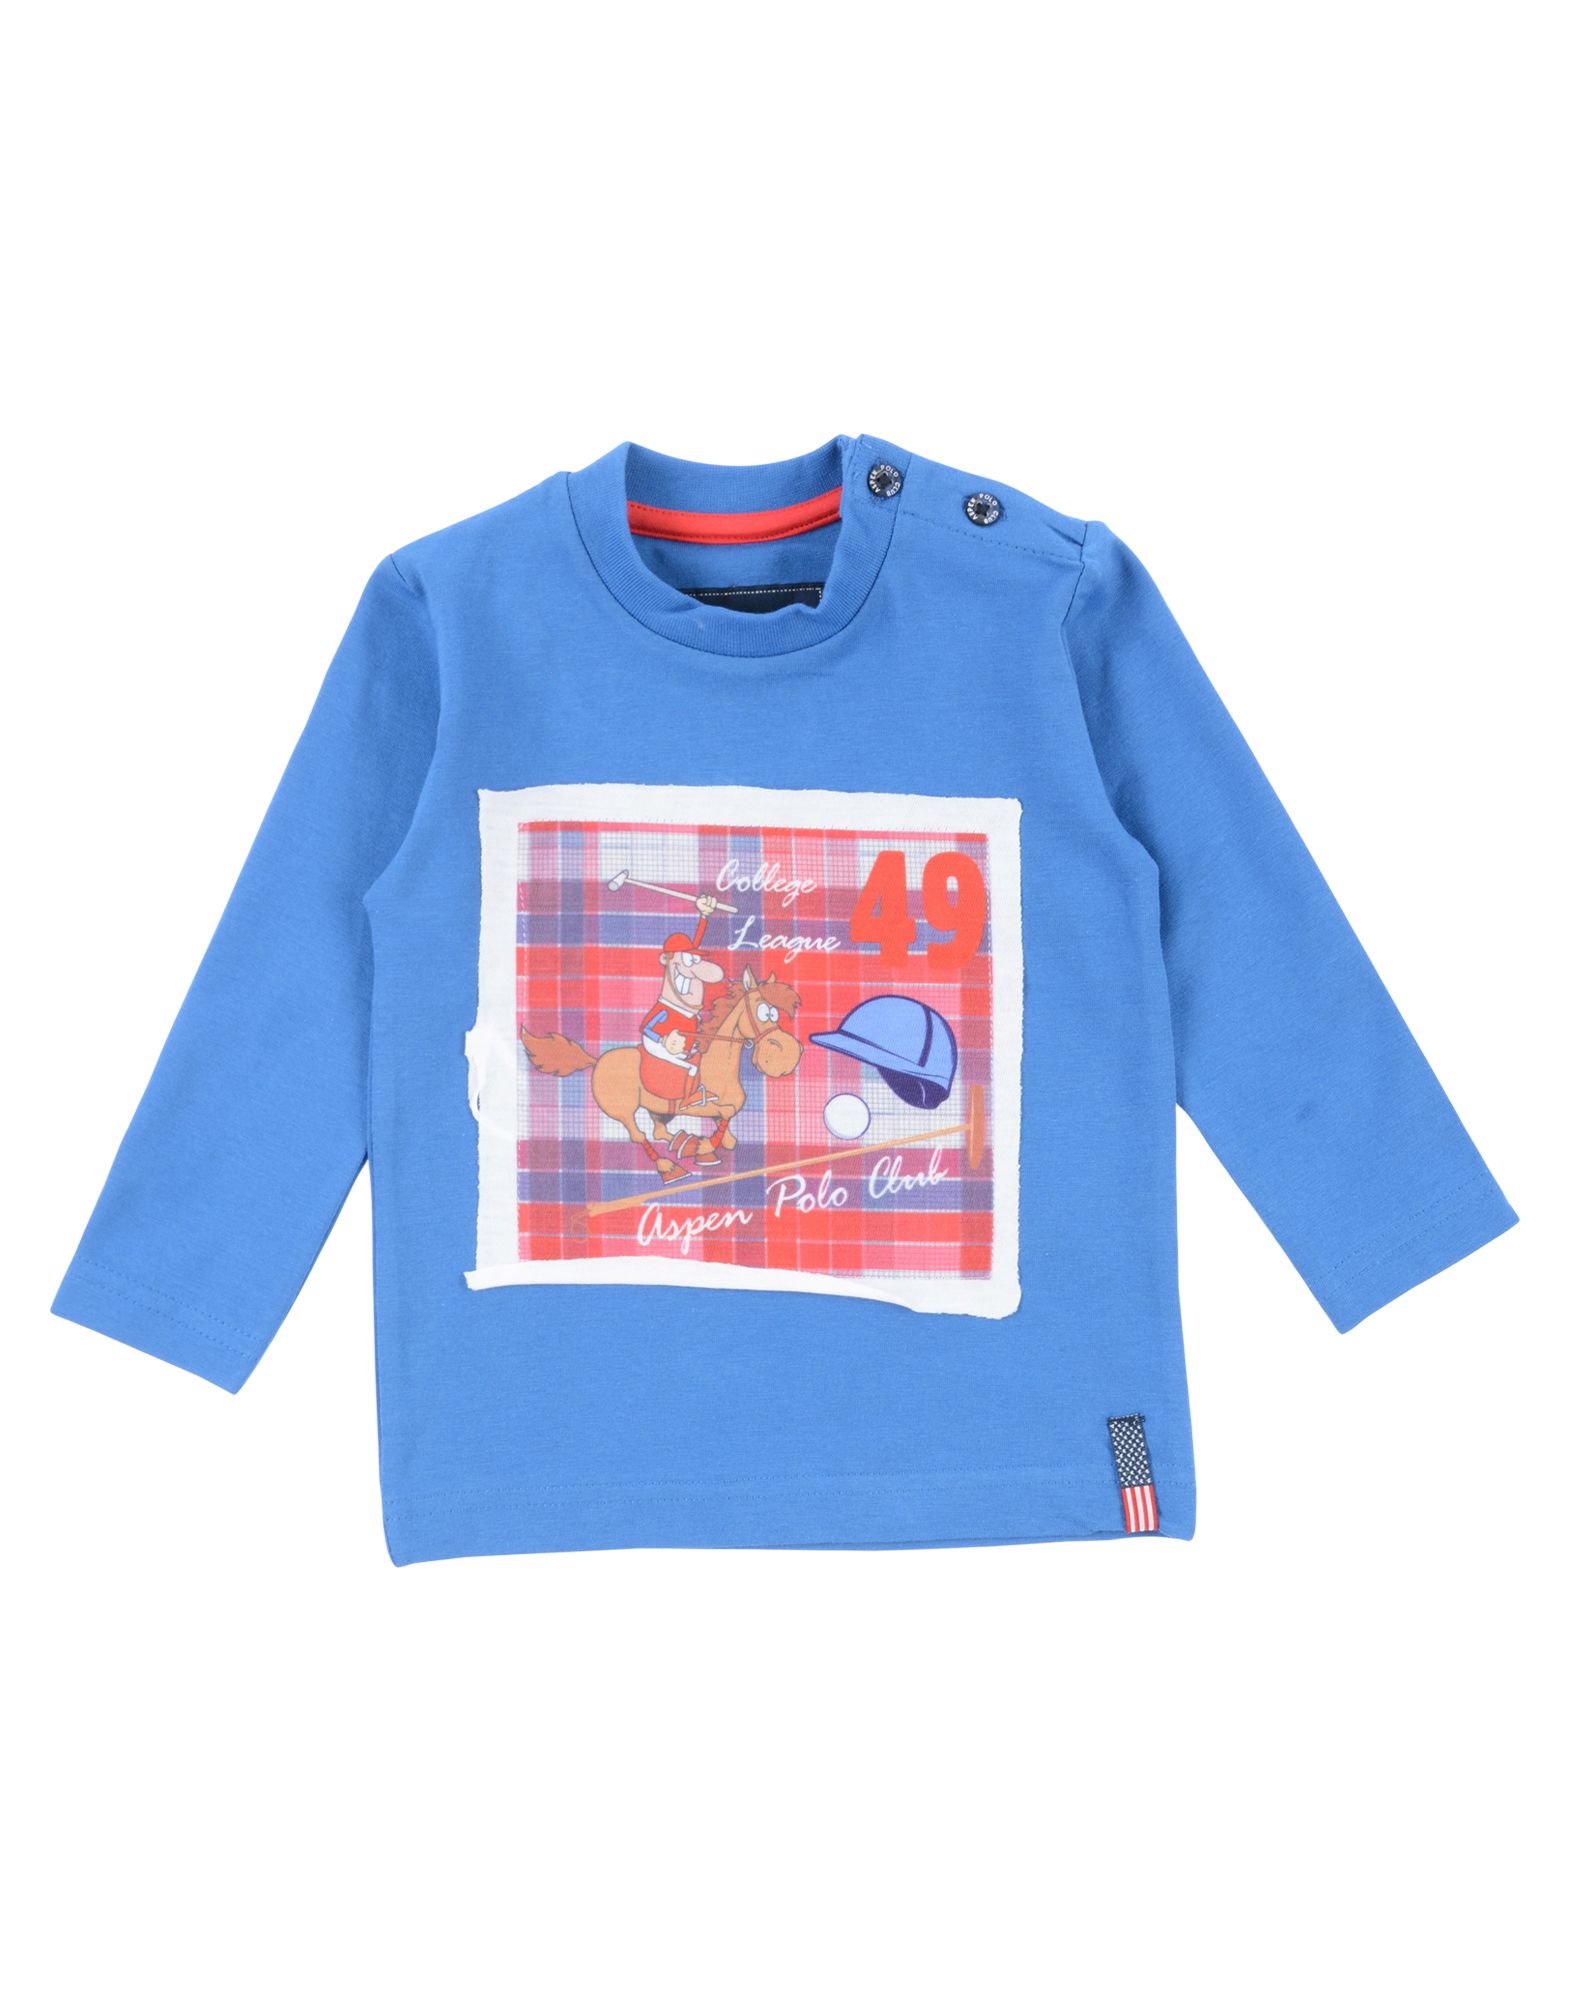 Aspen Polo Club Kids' T-shirts In Blue